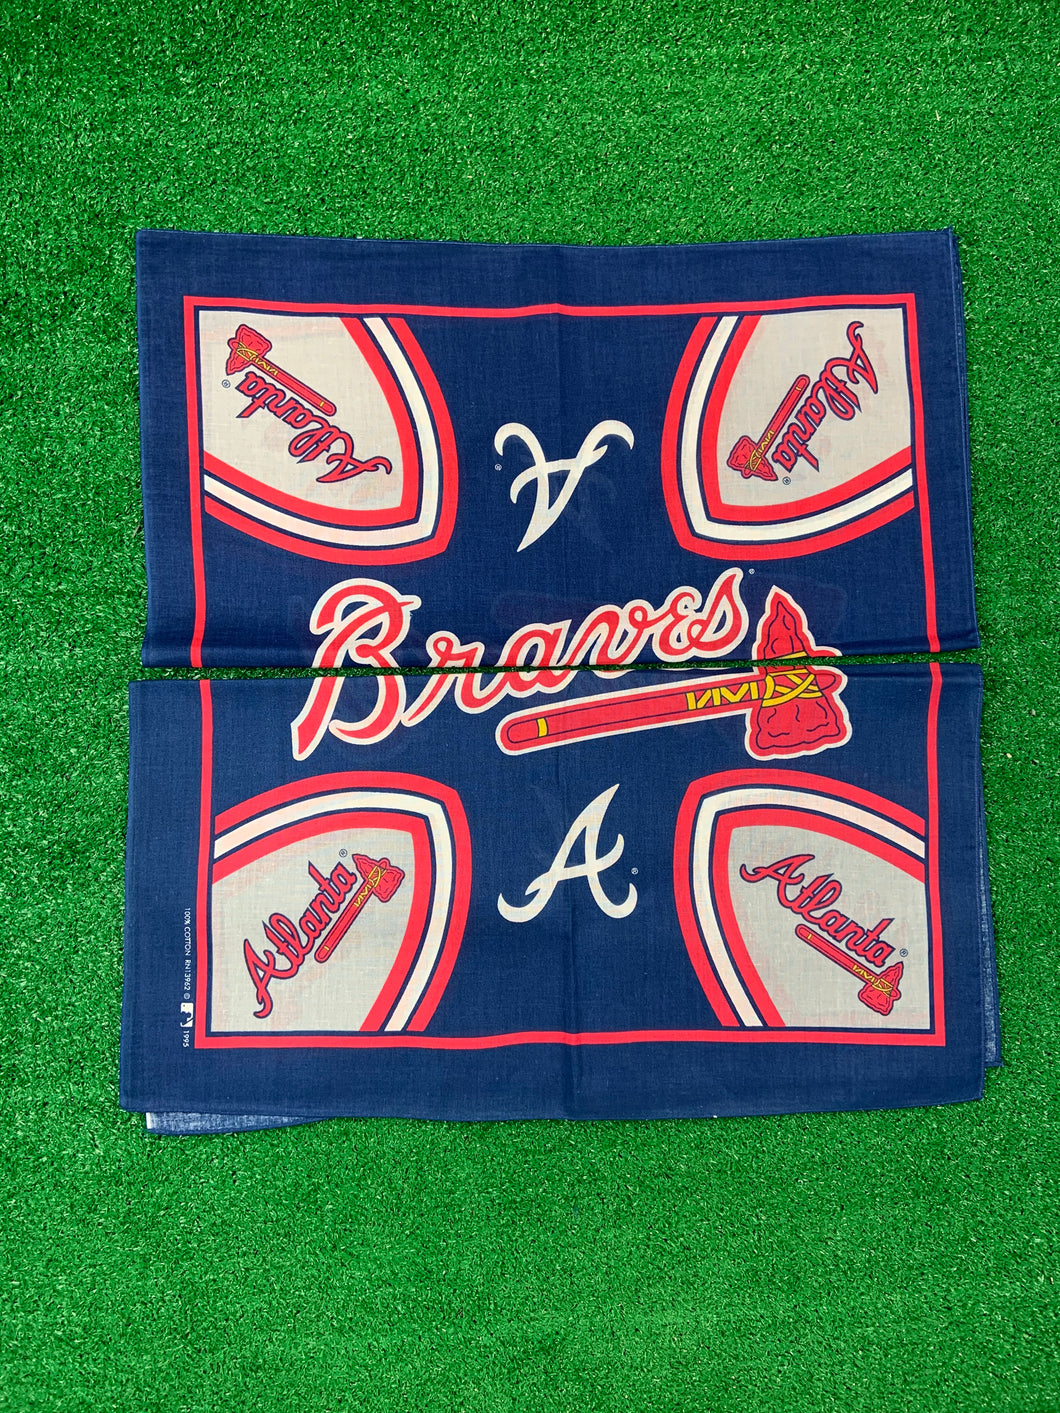 Vintage 1995 Atlanta Braves MLB Bandana USA